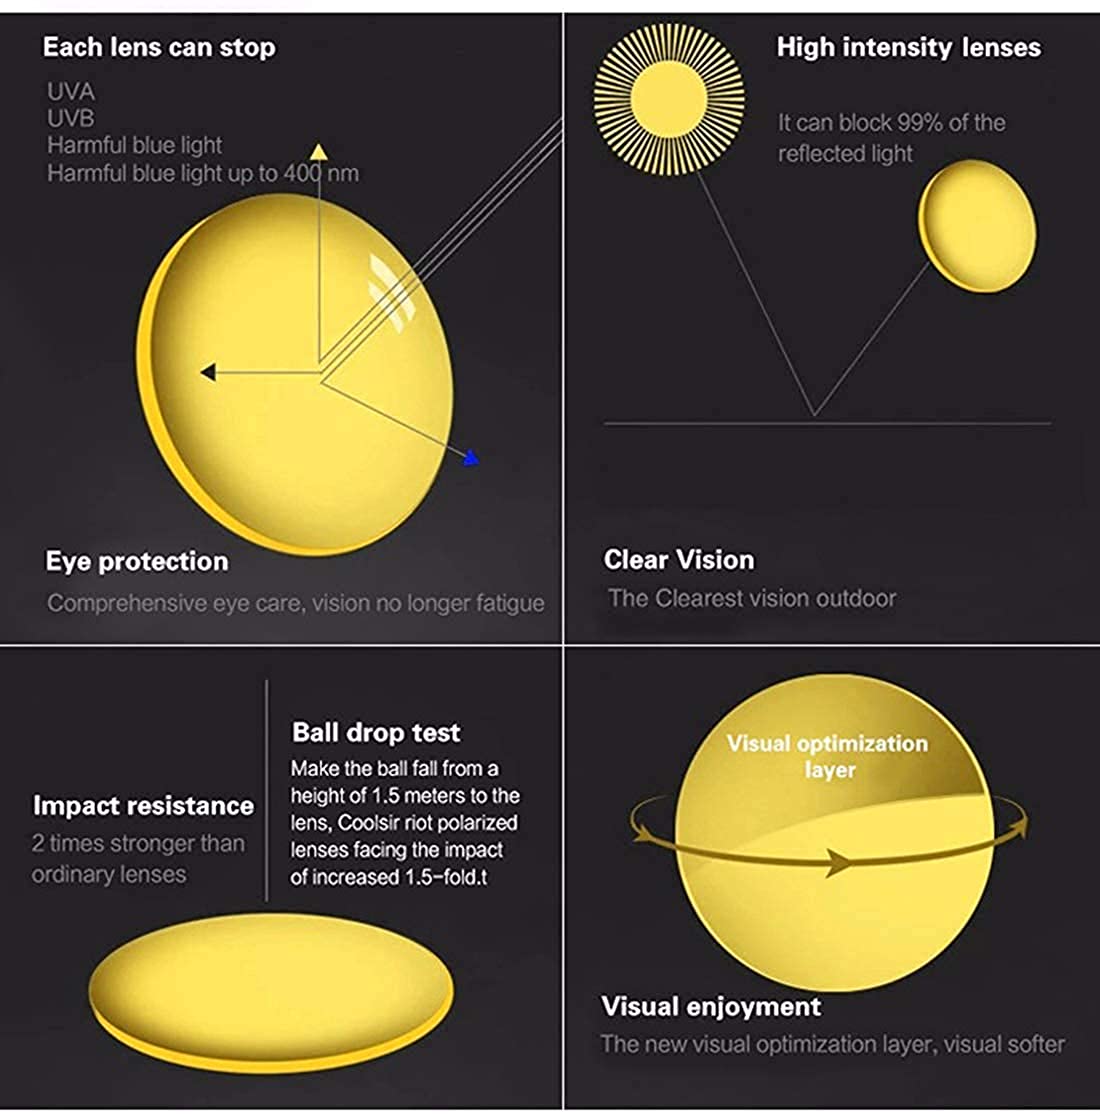 Night Vision Aviator Sunglasses for Driving Unisex Sunglasses - Yellow